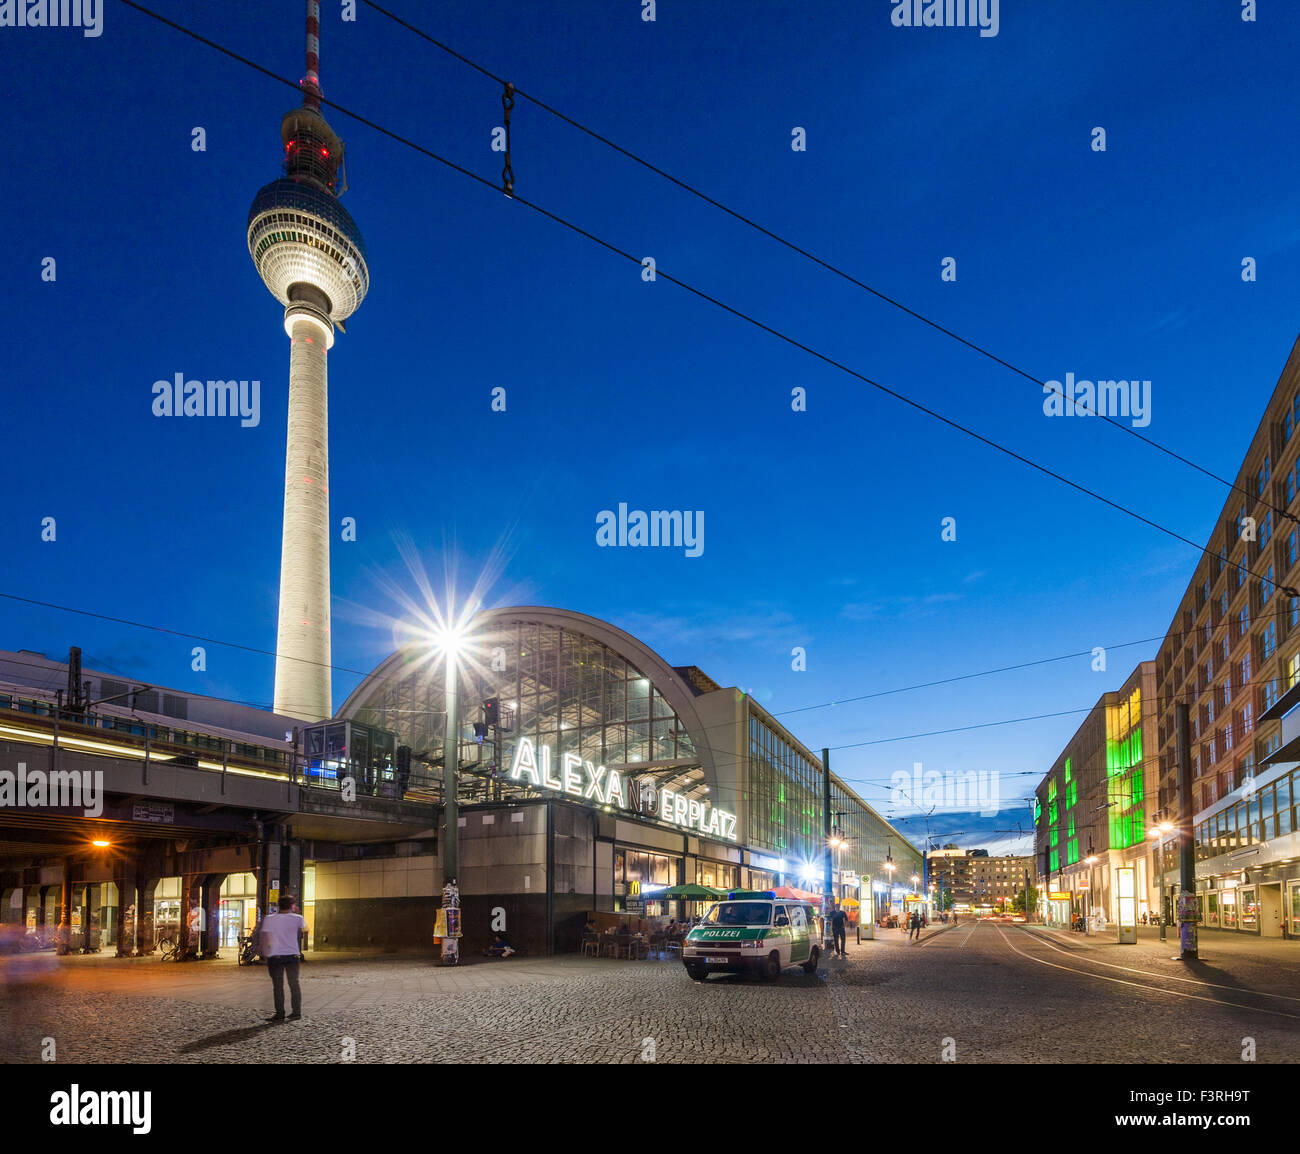 Alexanderplatz, Berlin, Allemagne Banque D'Images